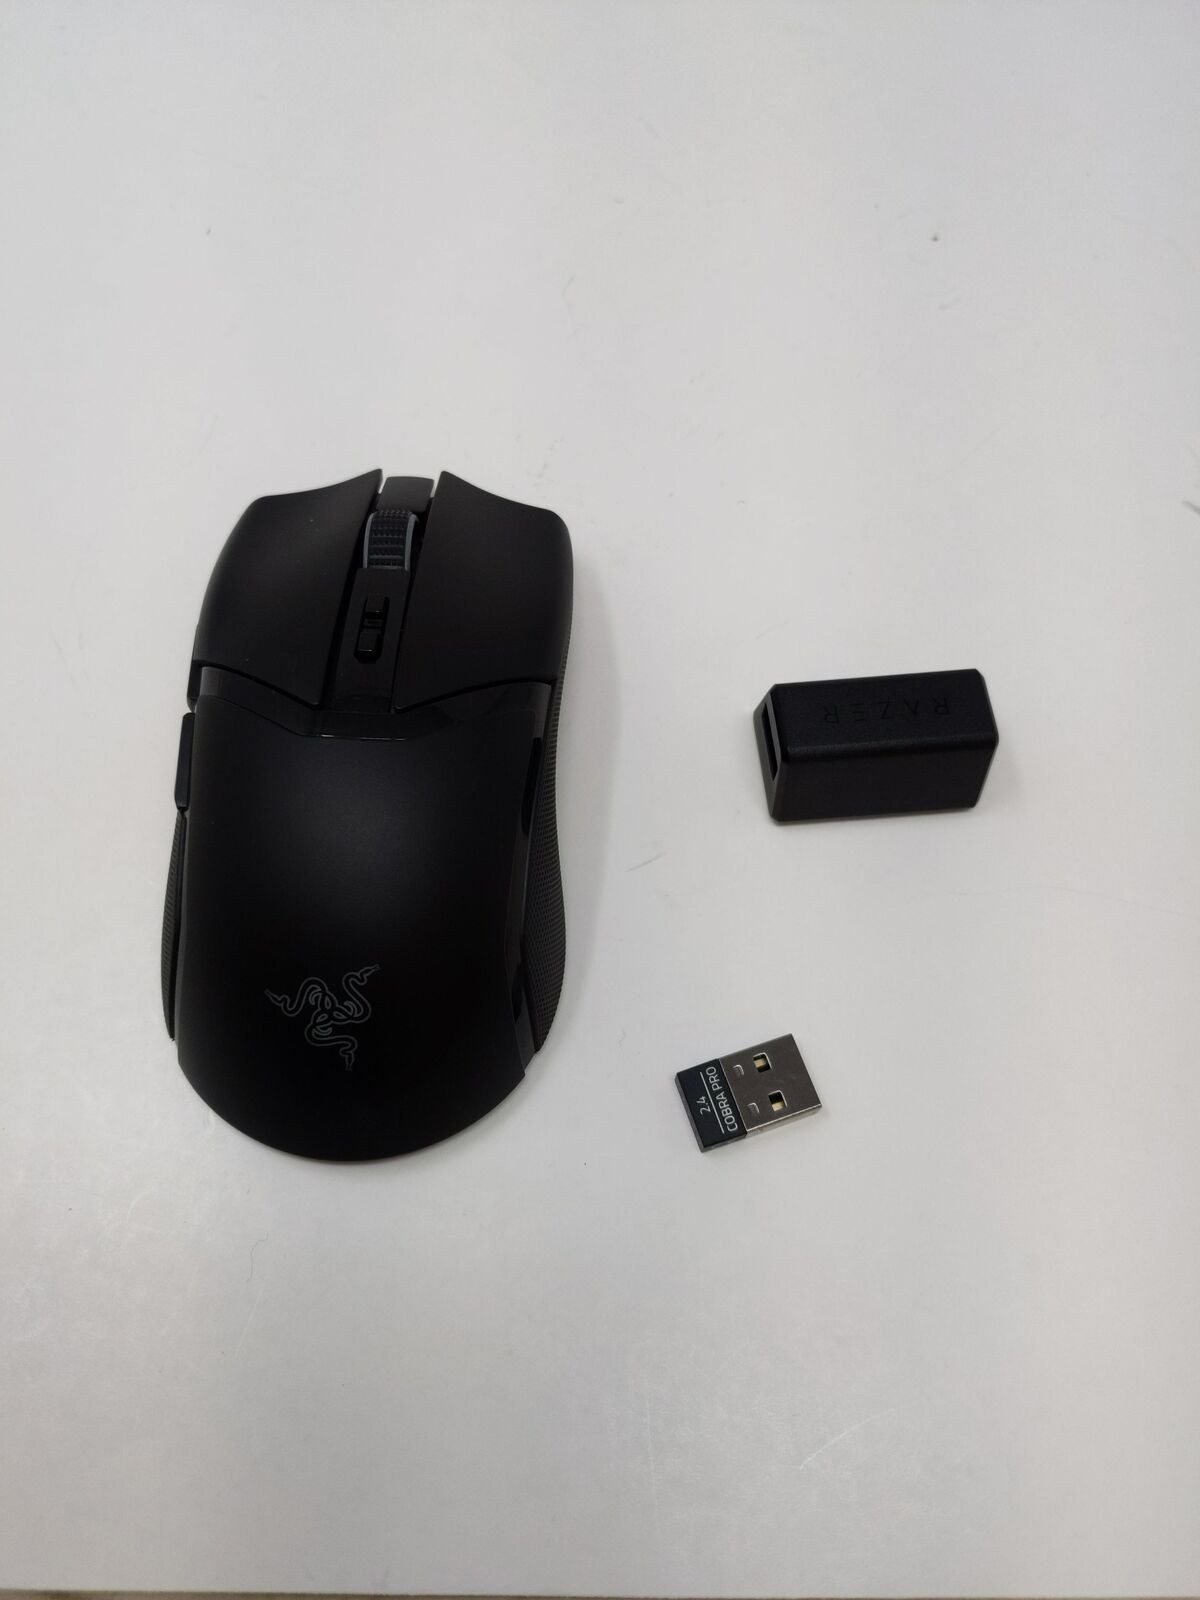 Razer Cobra Pro Wireless Gaming Mouse: 10 Customizable Controls - Chroma RGB